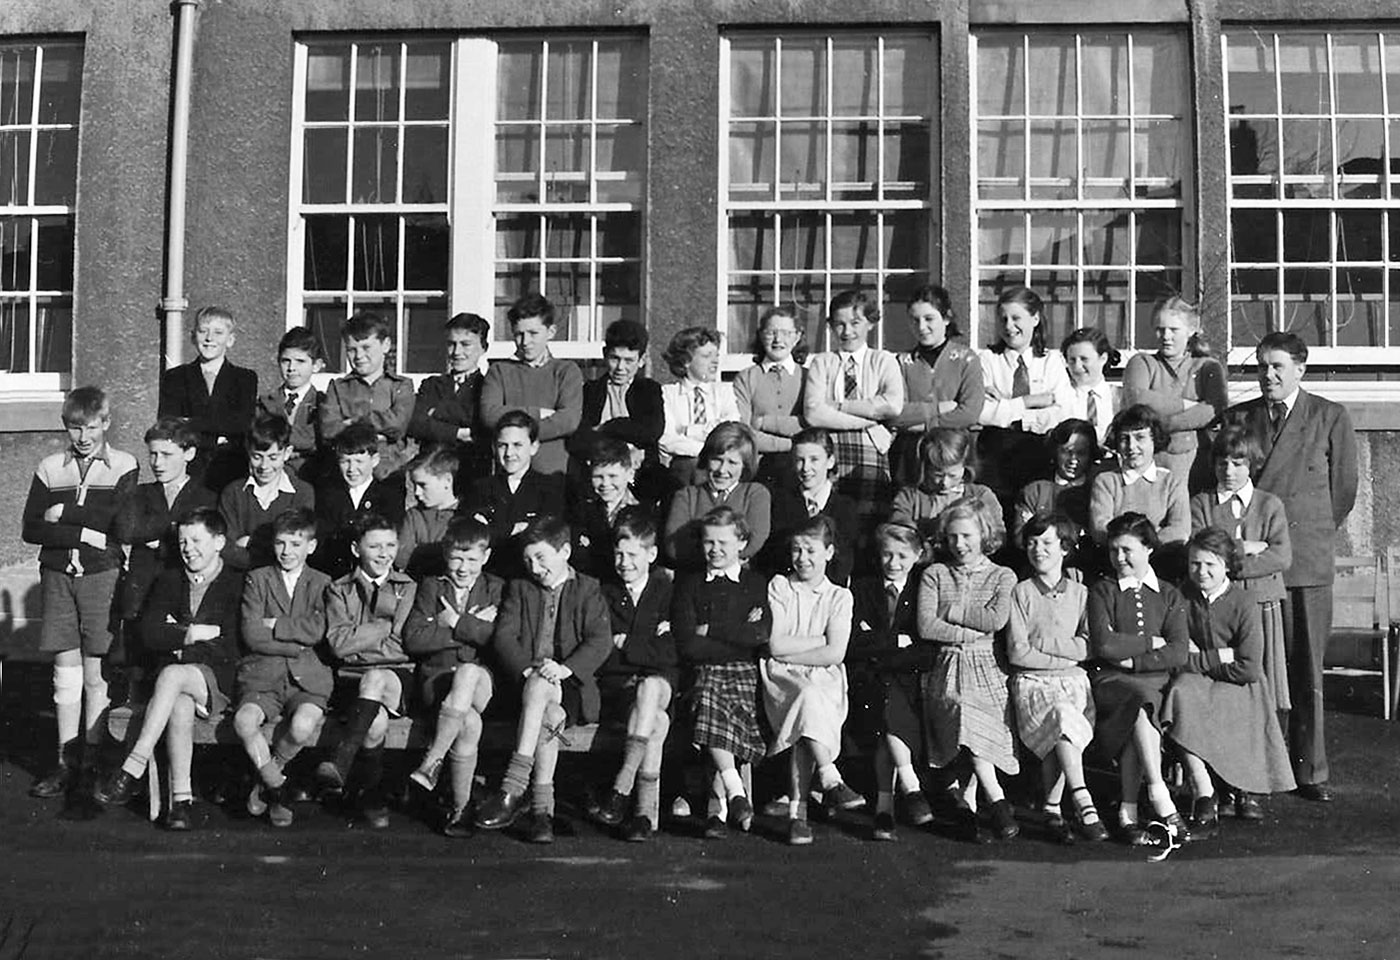 St Francis School Class, 1957